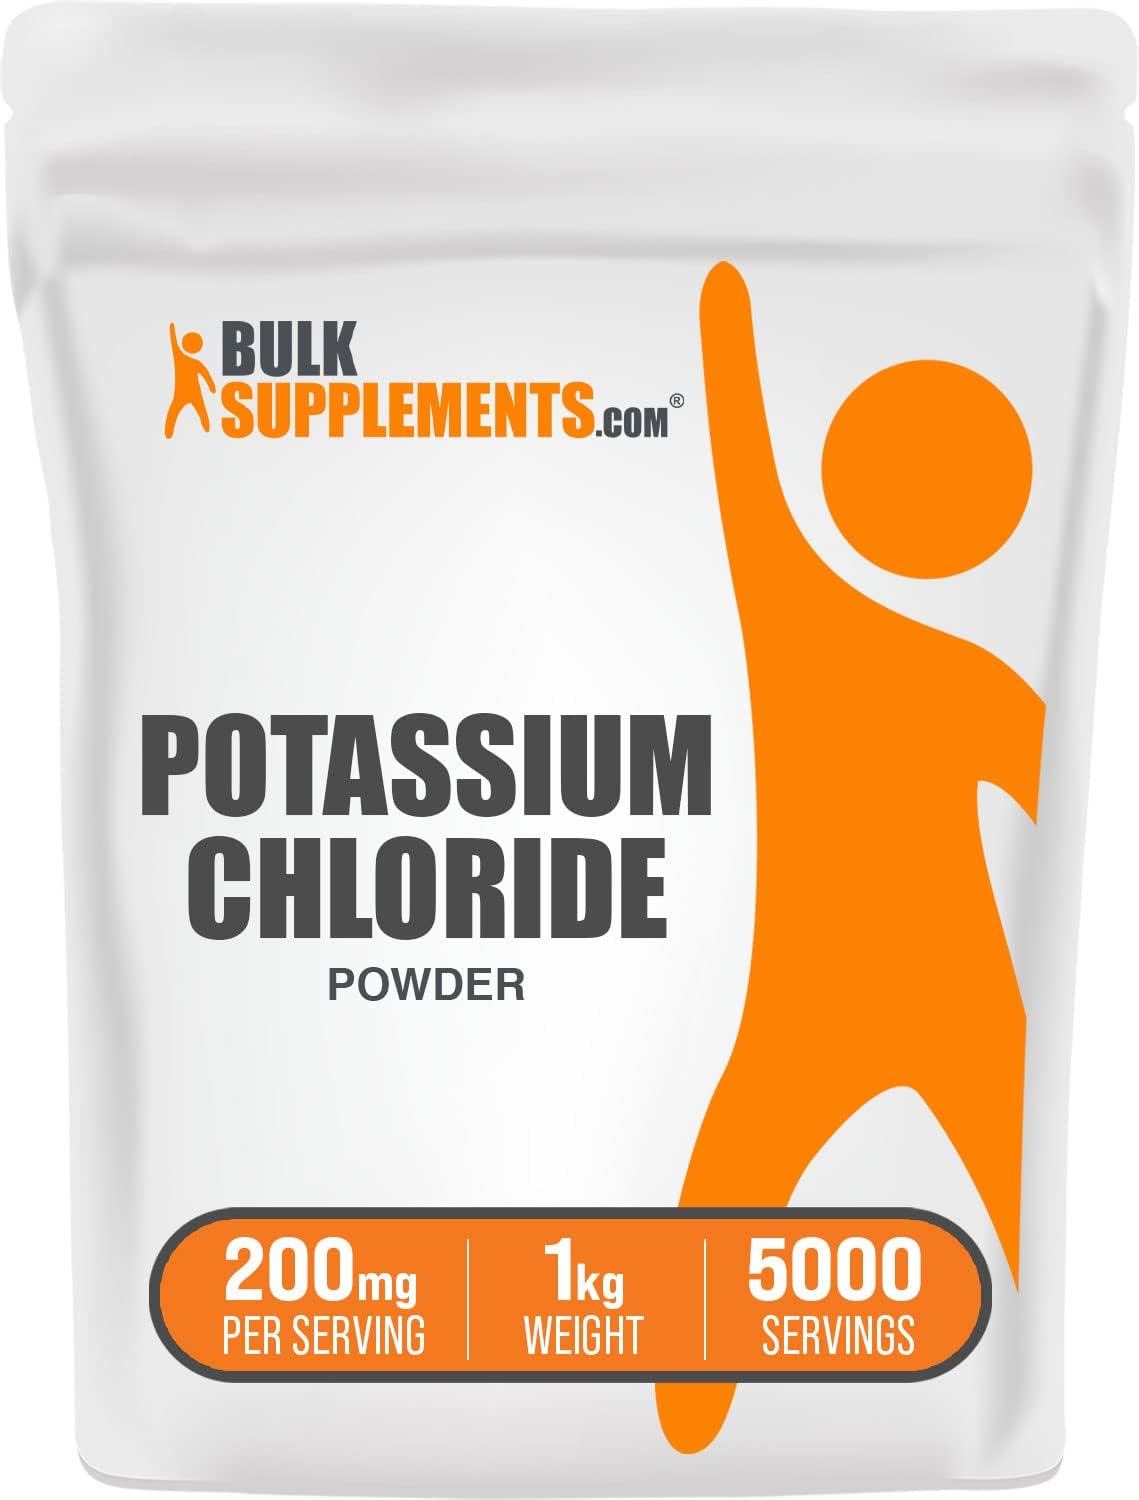 Bulk Supplements Potassium Chloride Powder 1 Kg.